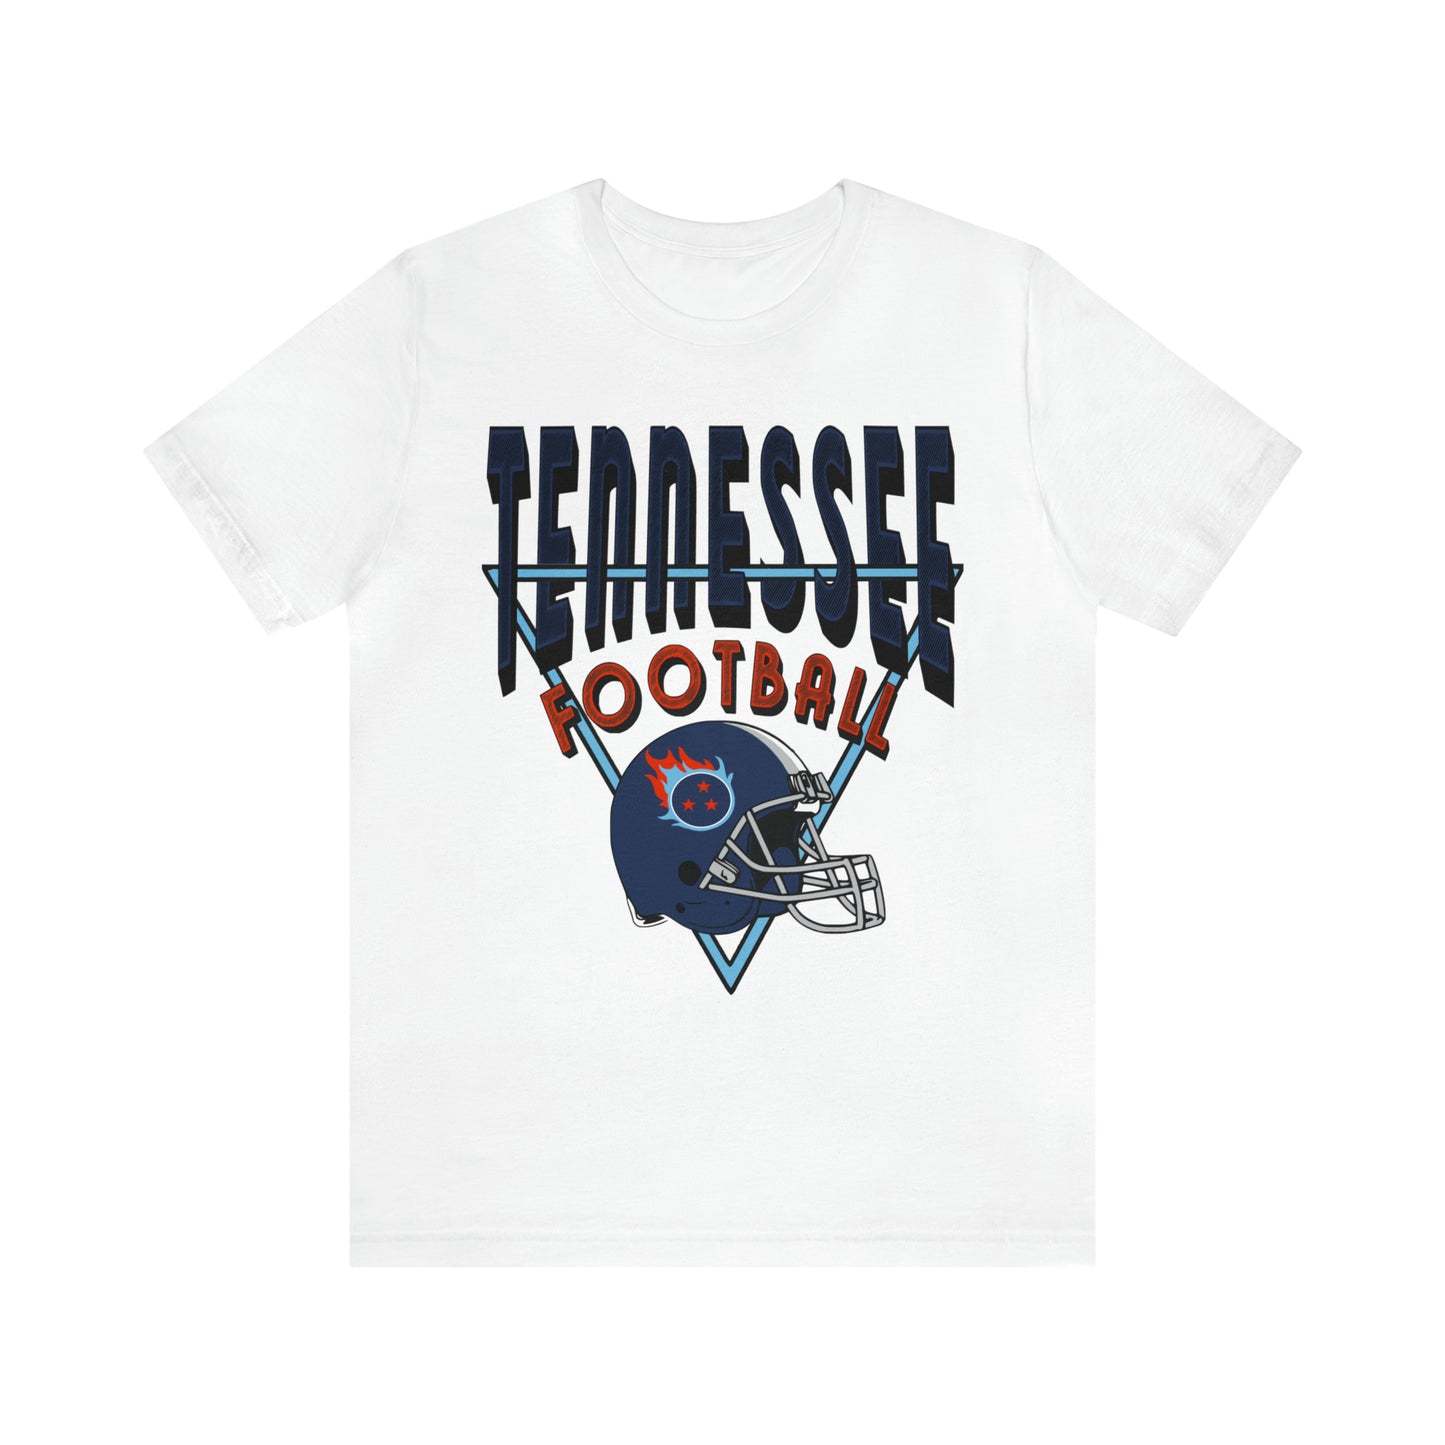 90's Tennessee Titans Tee - Vintage Style Football Short Sleeve T-Shirt- Men's & Women's Football Apparel - Design 3